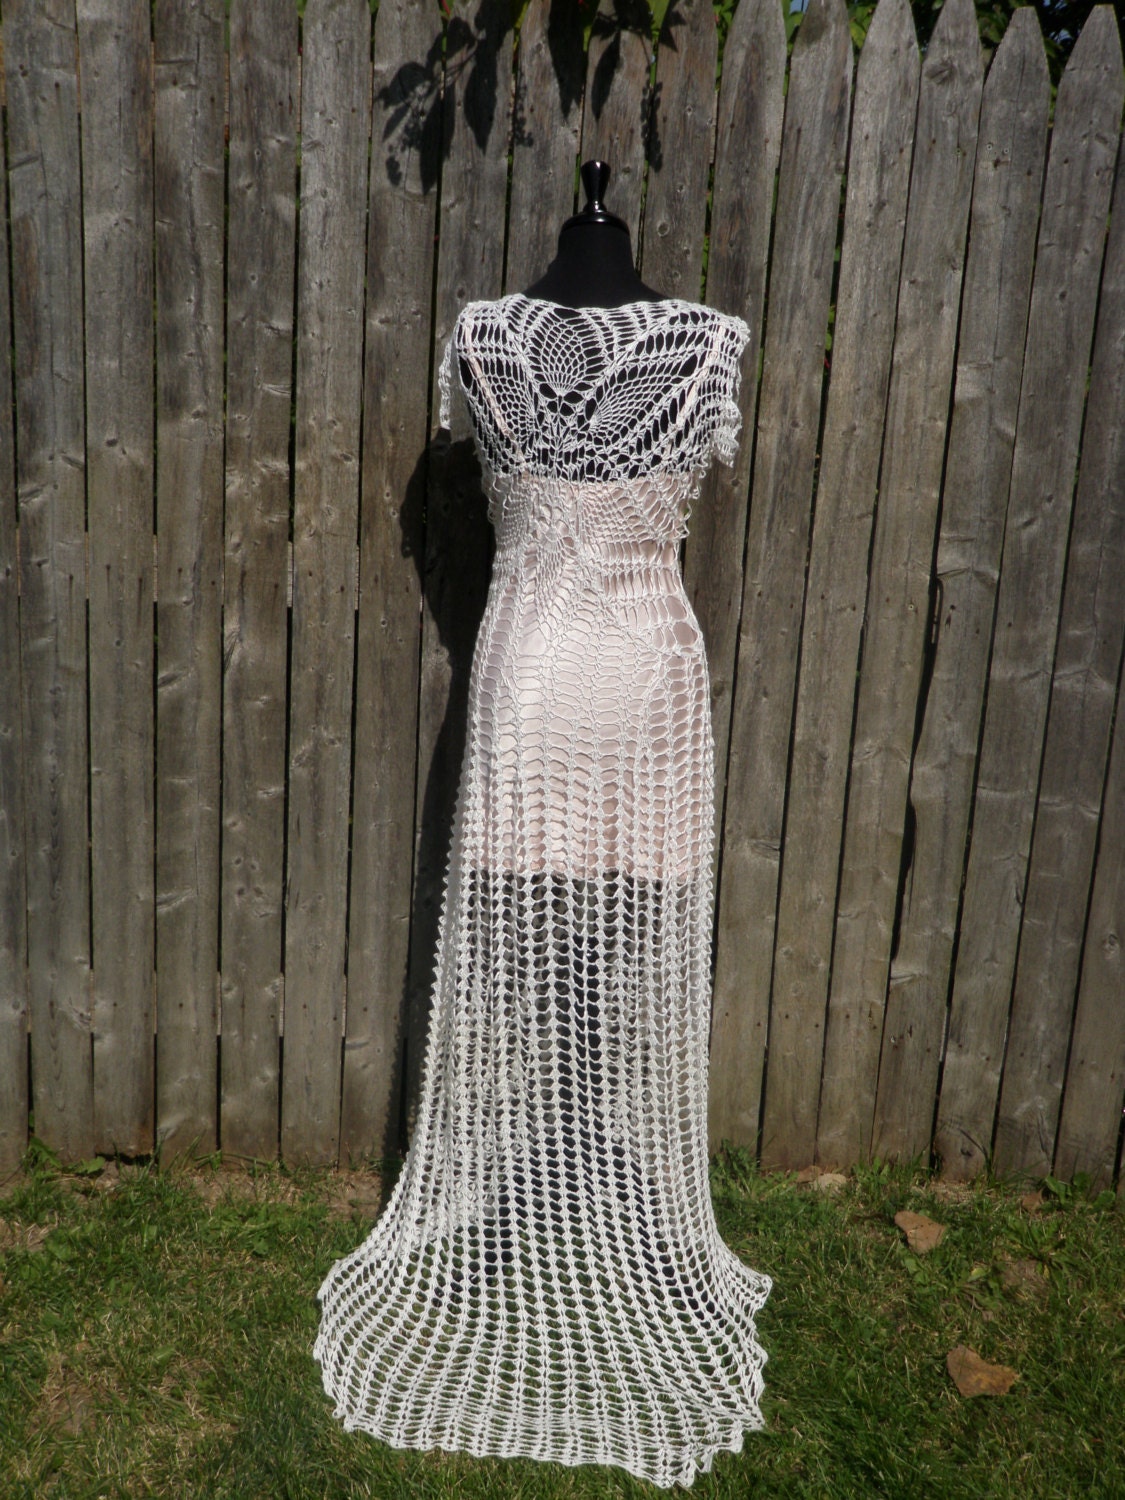 Lace crochet handmade wedding dress with slight train made to